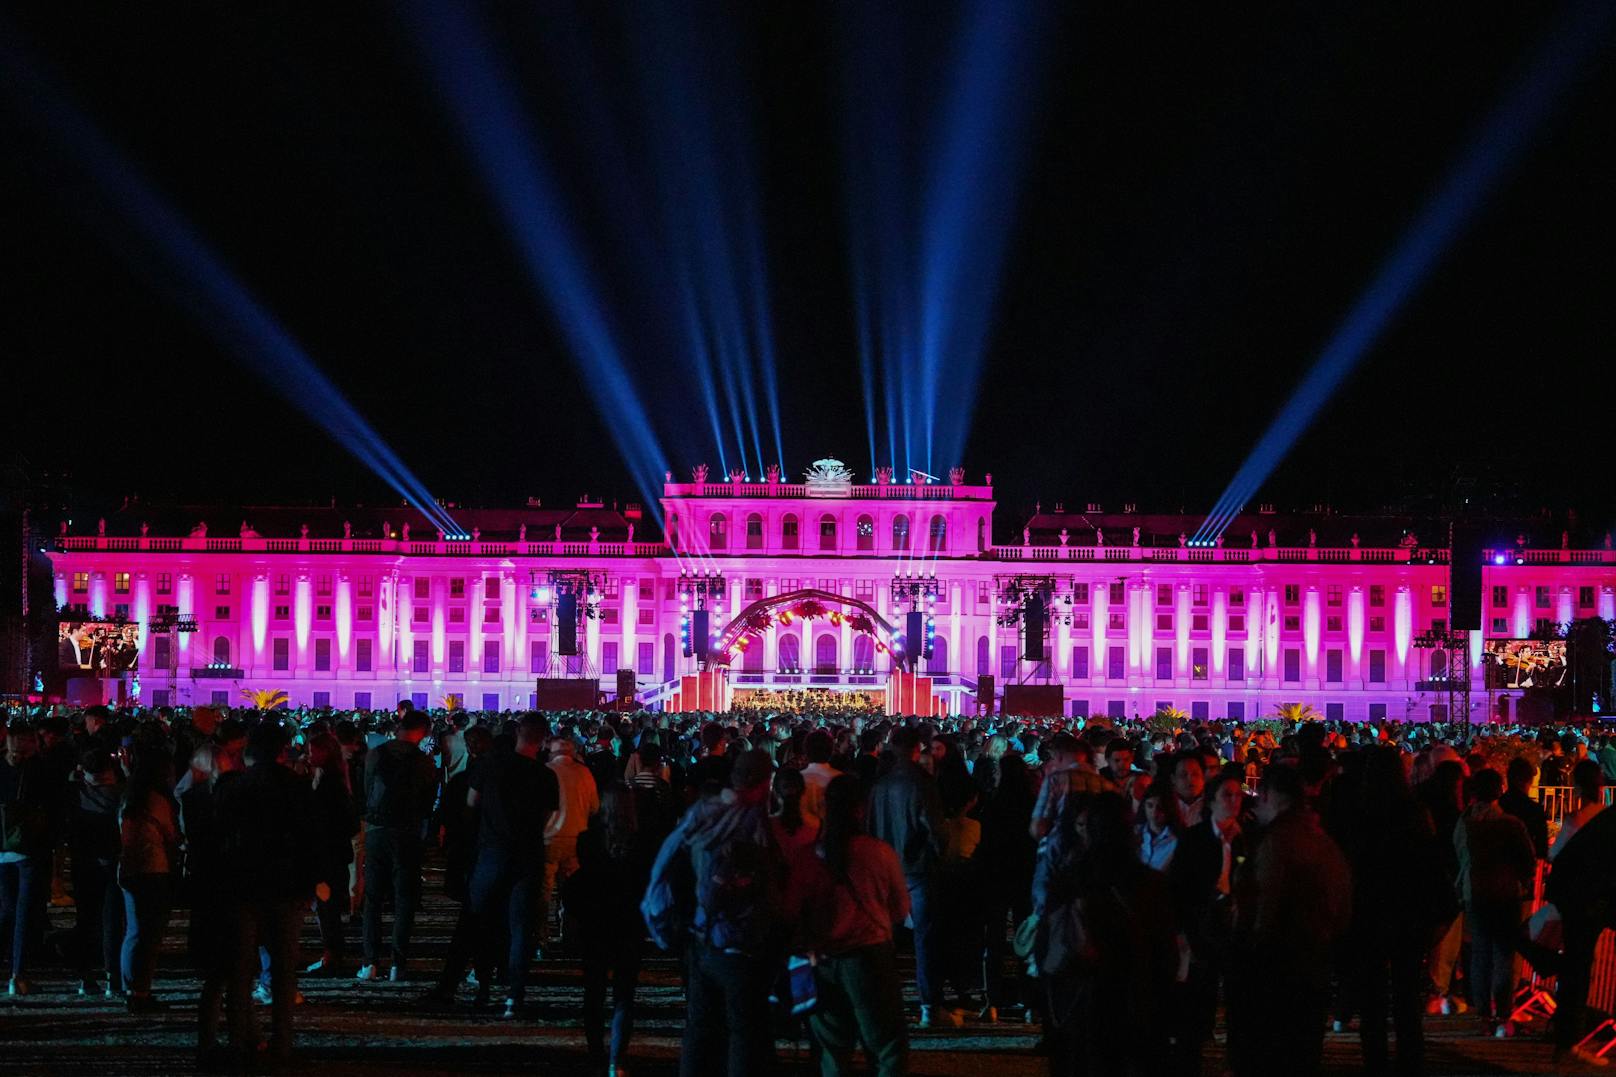 Das Sommernachtskonzert 2022 fand am 16. Juni in Schönbrunn statt.